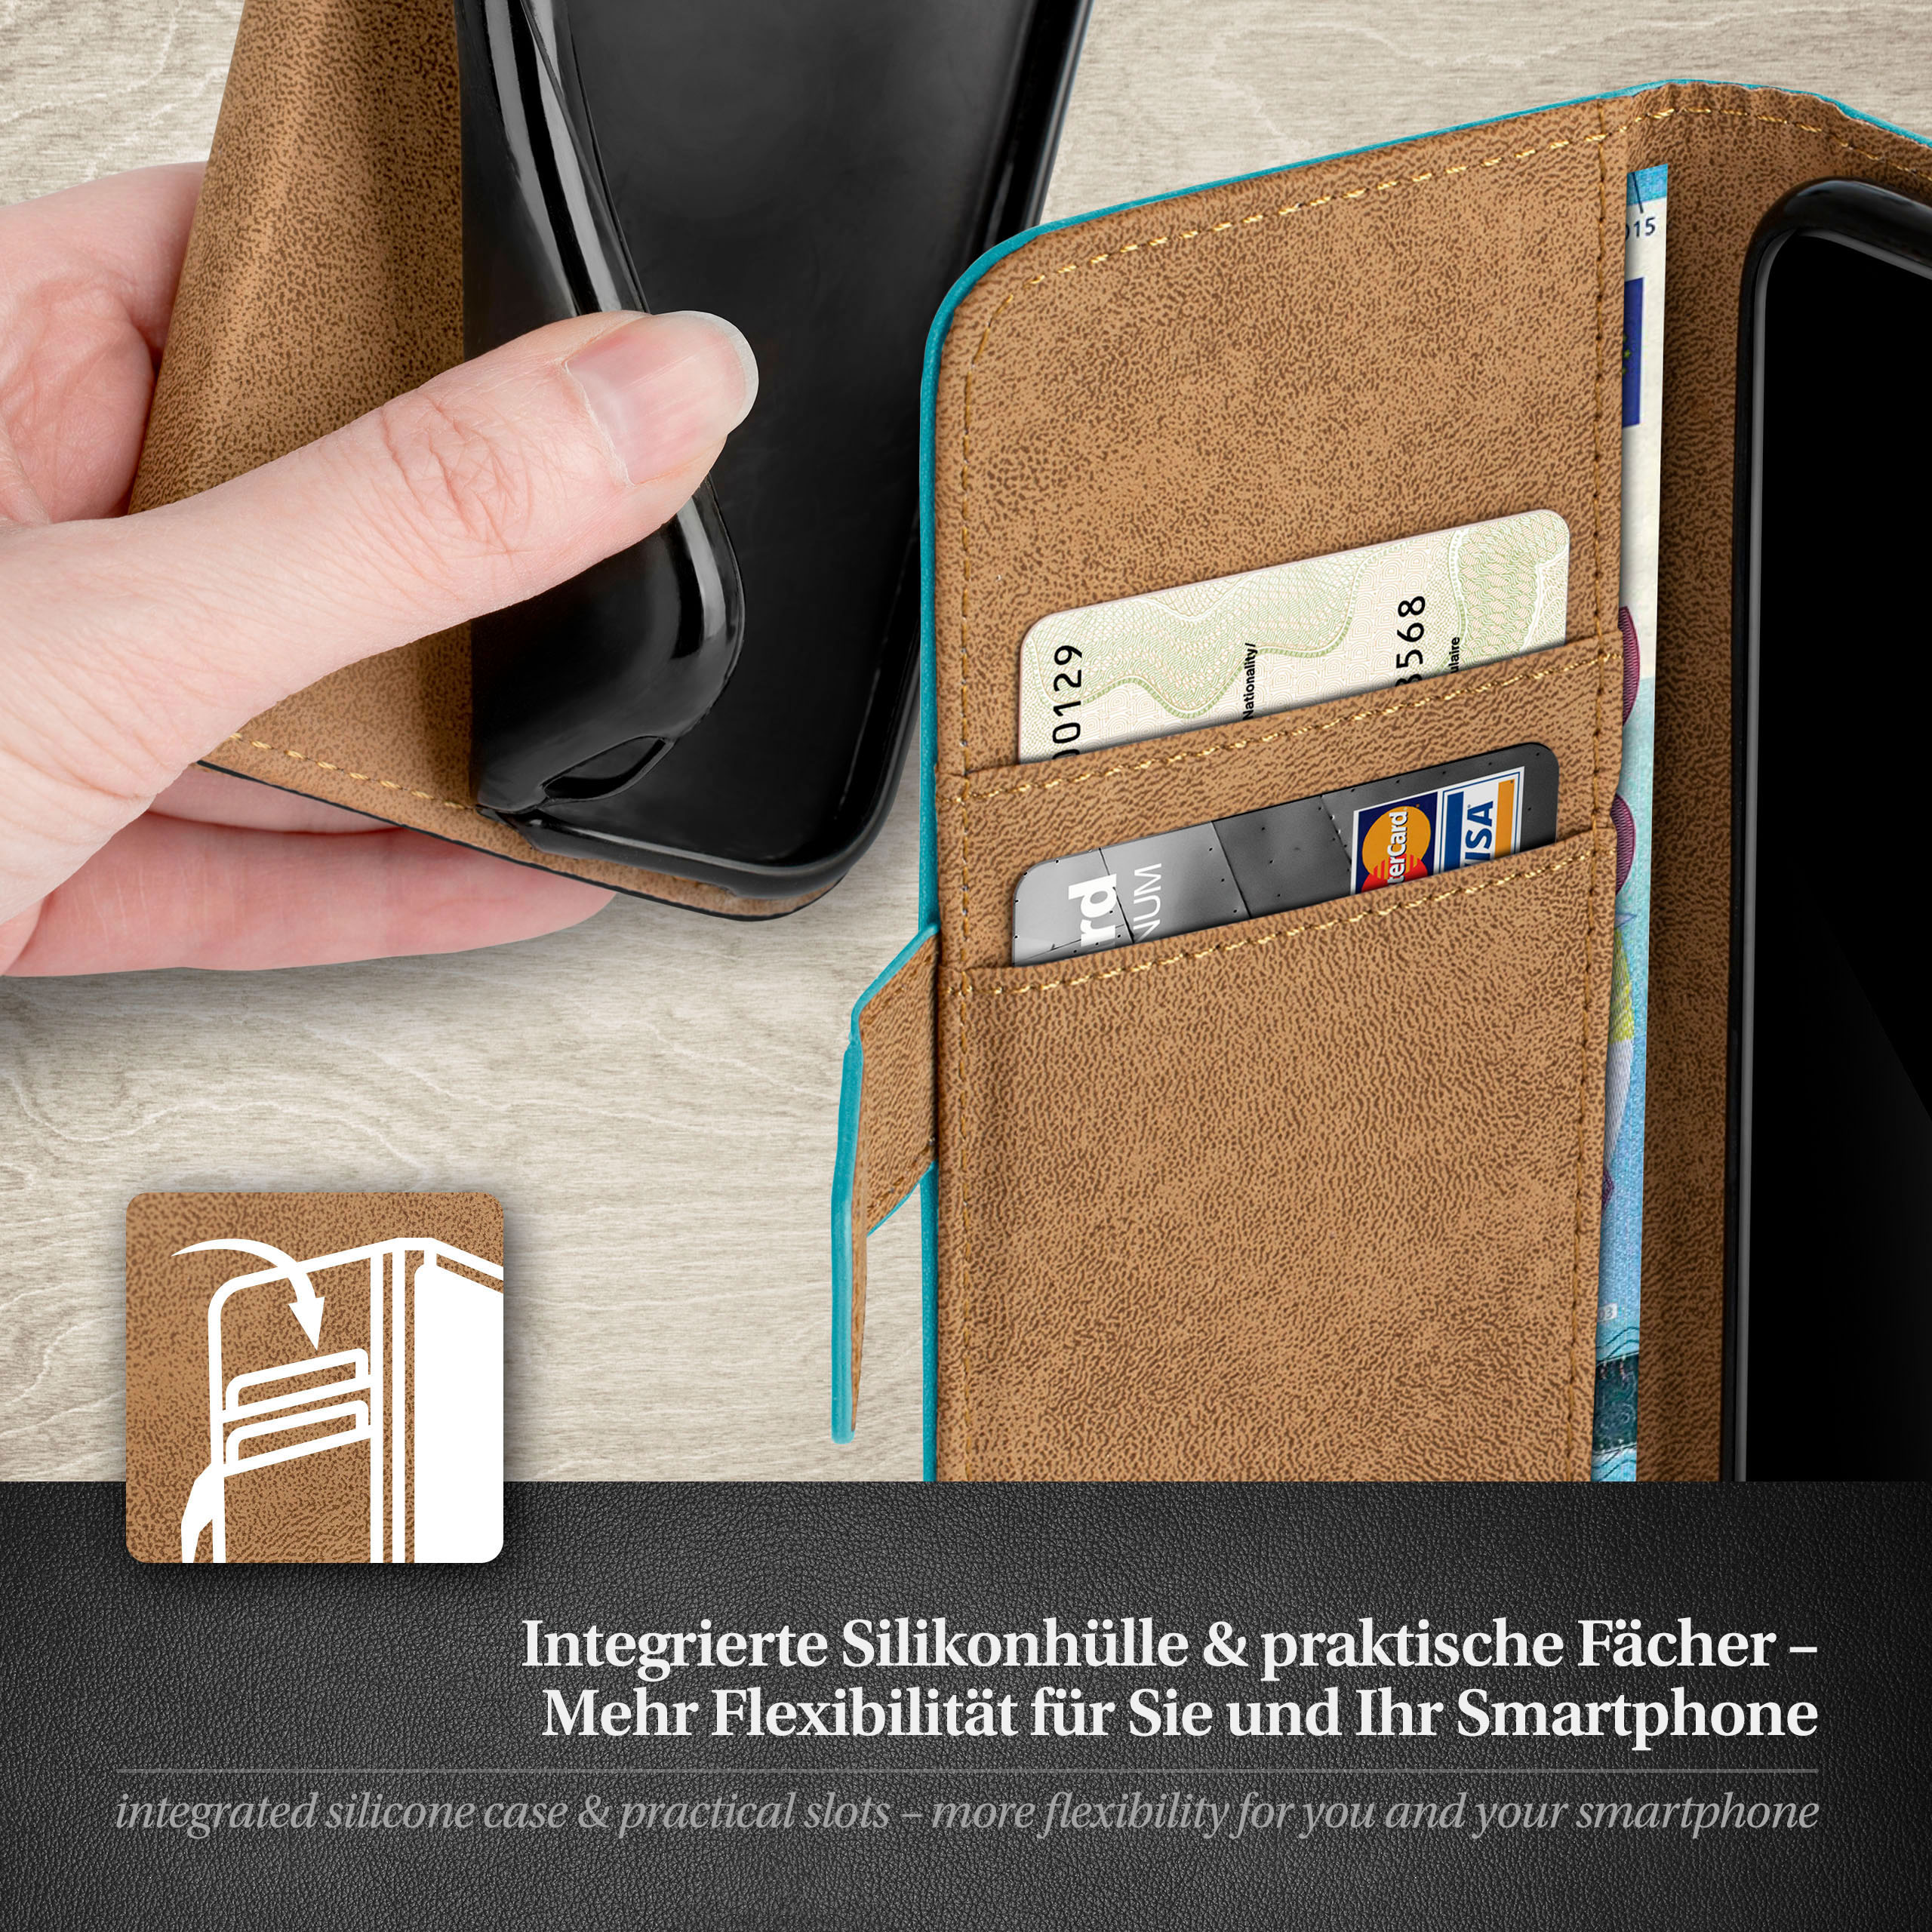 MOEX Book Case, Bookcover, Galaxy S5 S5 Aqua-Cyan Neo, Samsung, 